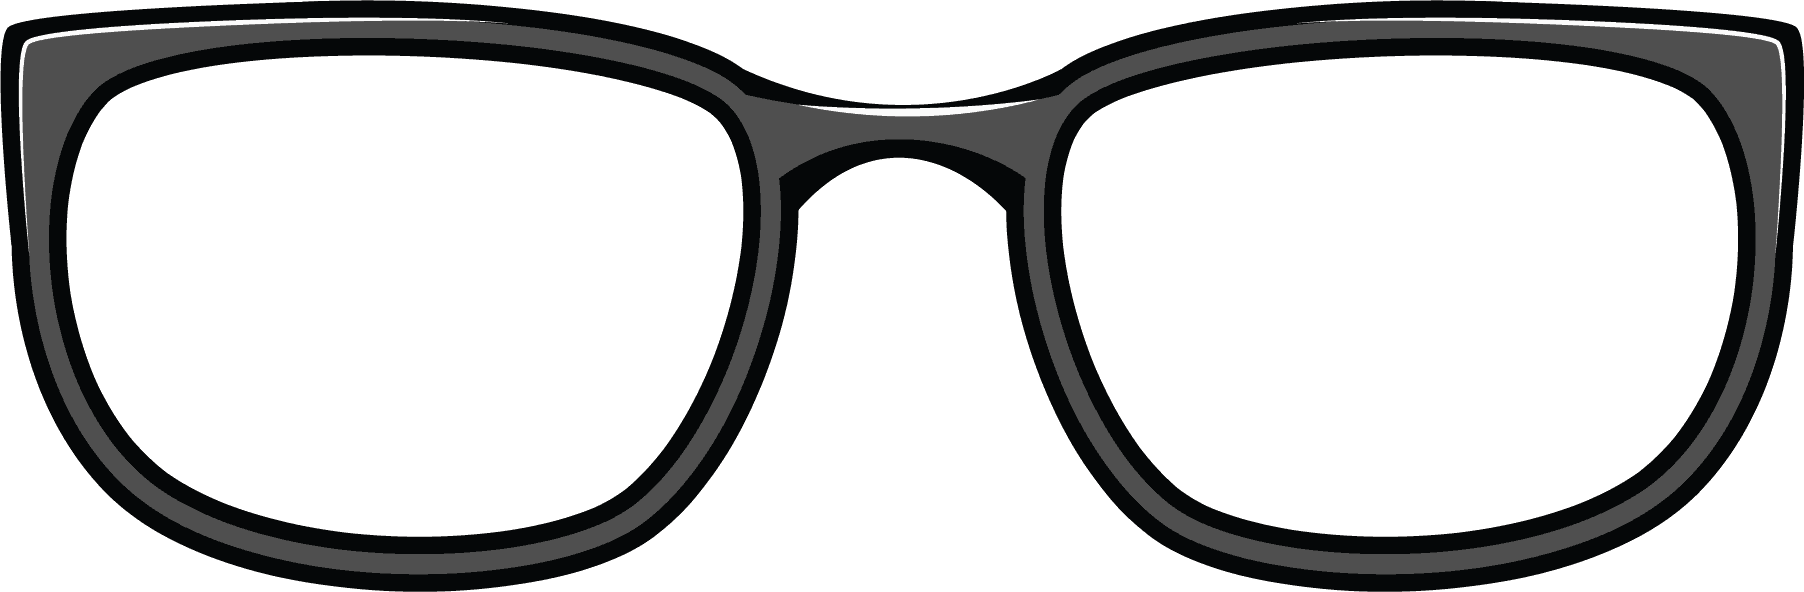 Clip art glasses - Free Clipart Images